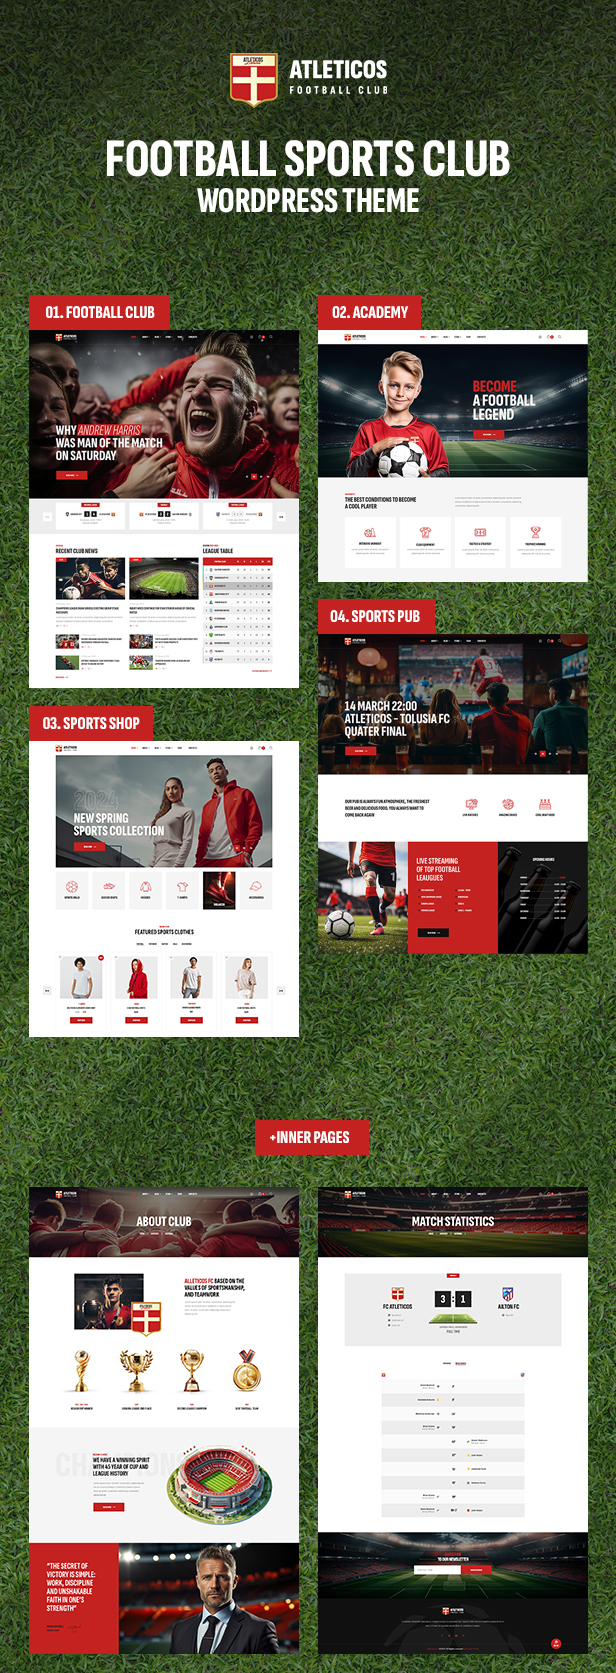 Atleticos - Soccer & Football Sports Club WordPress Theme - 5